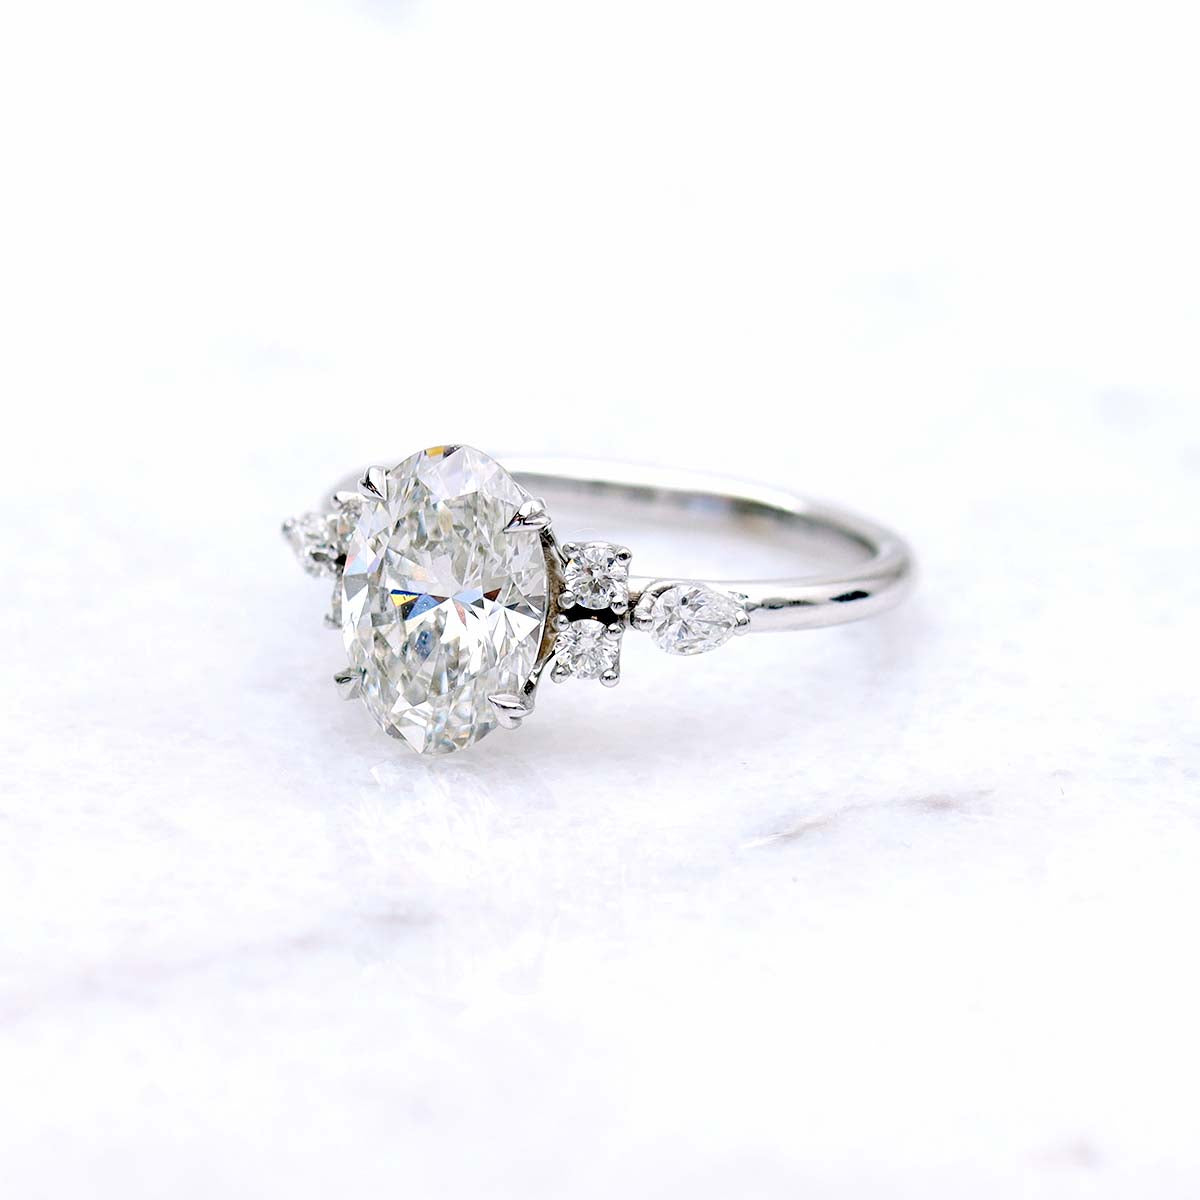 The Stella Jane Engagement Ring #3642-3